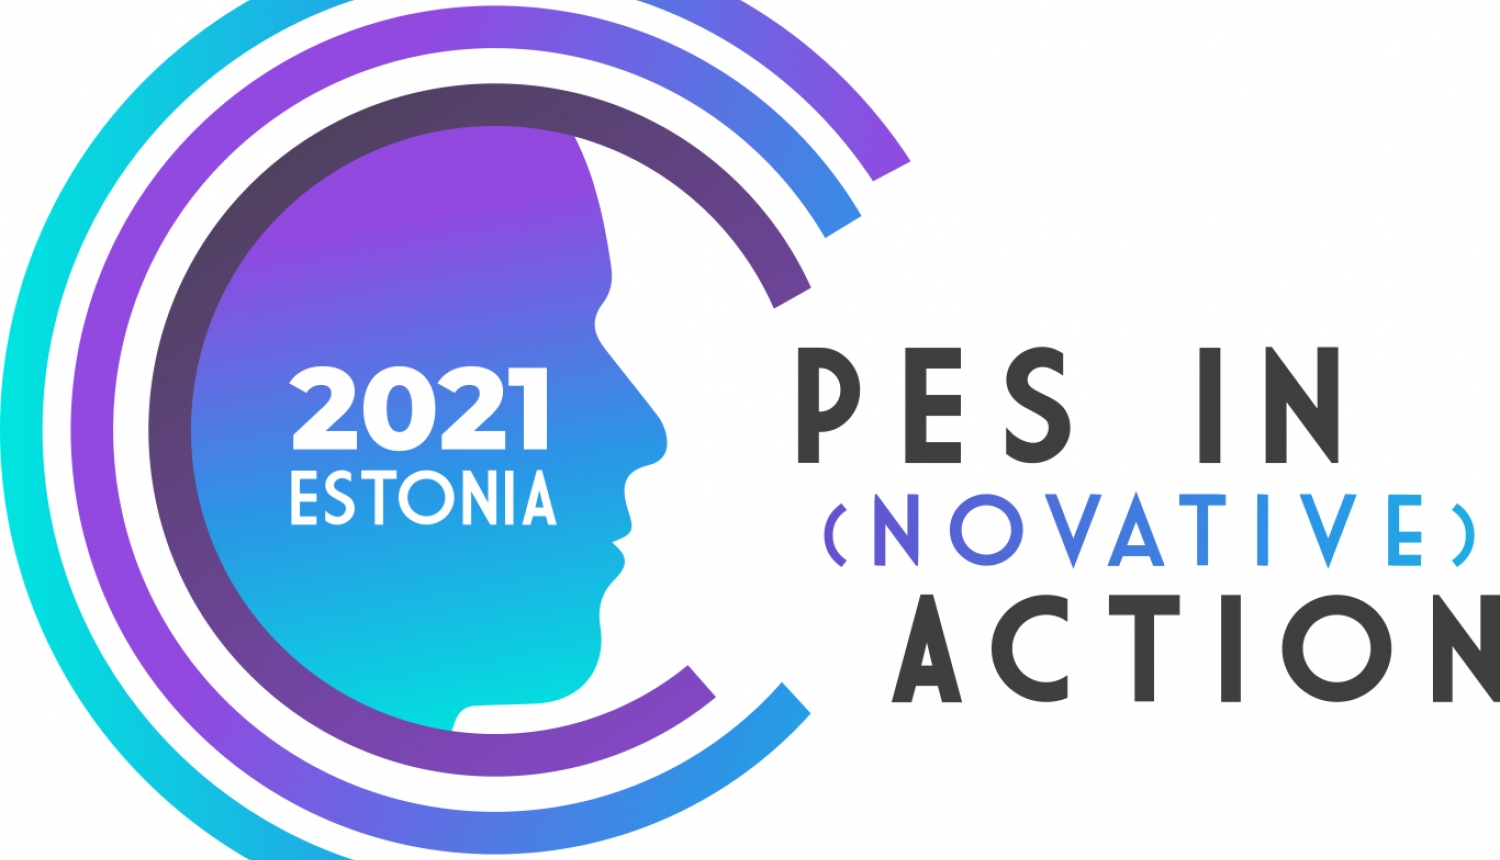 WAPES konferences logo. 2021 Estonia. PES in(novative) action